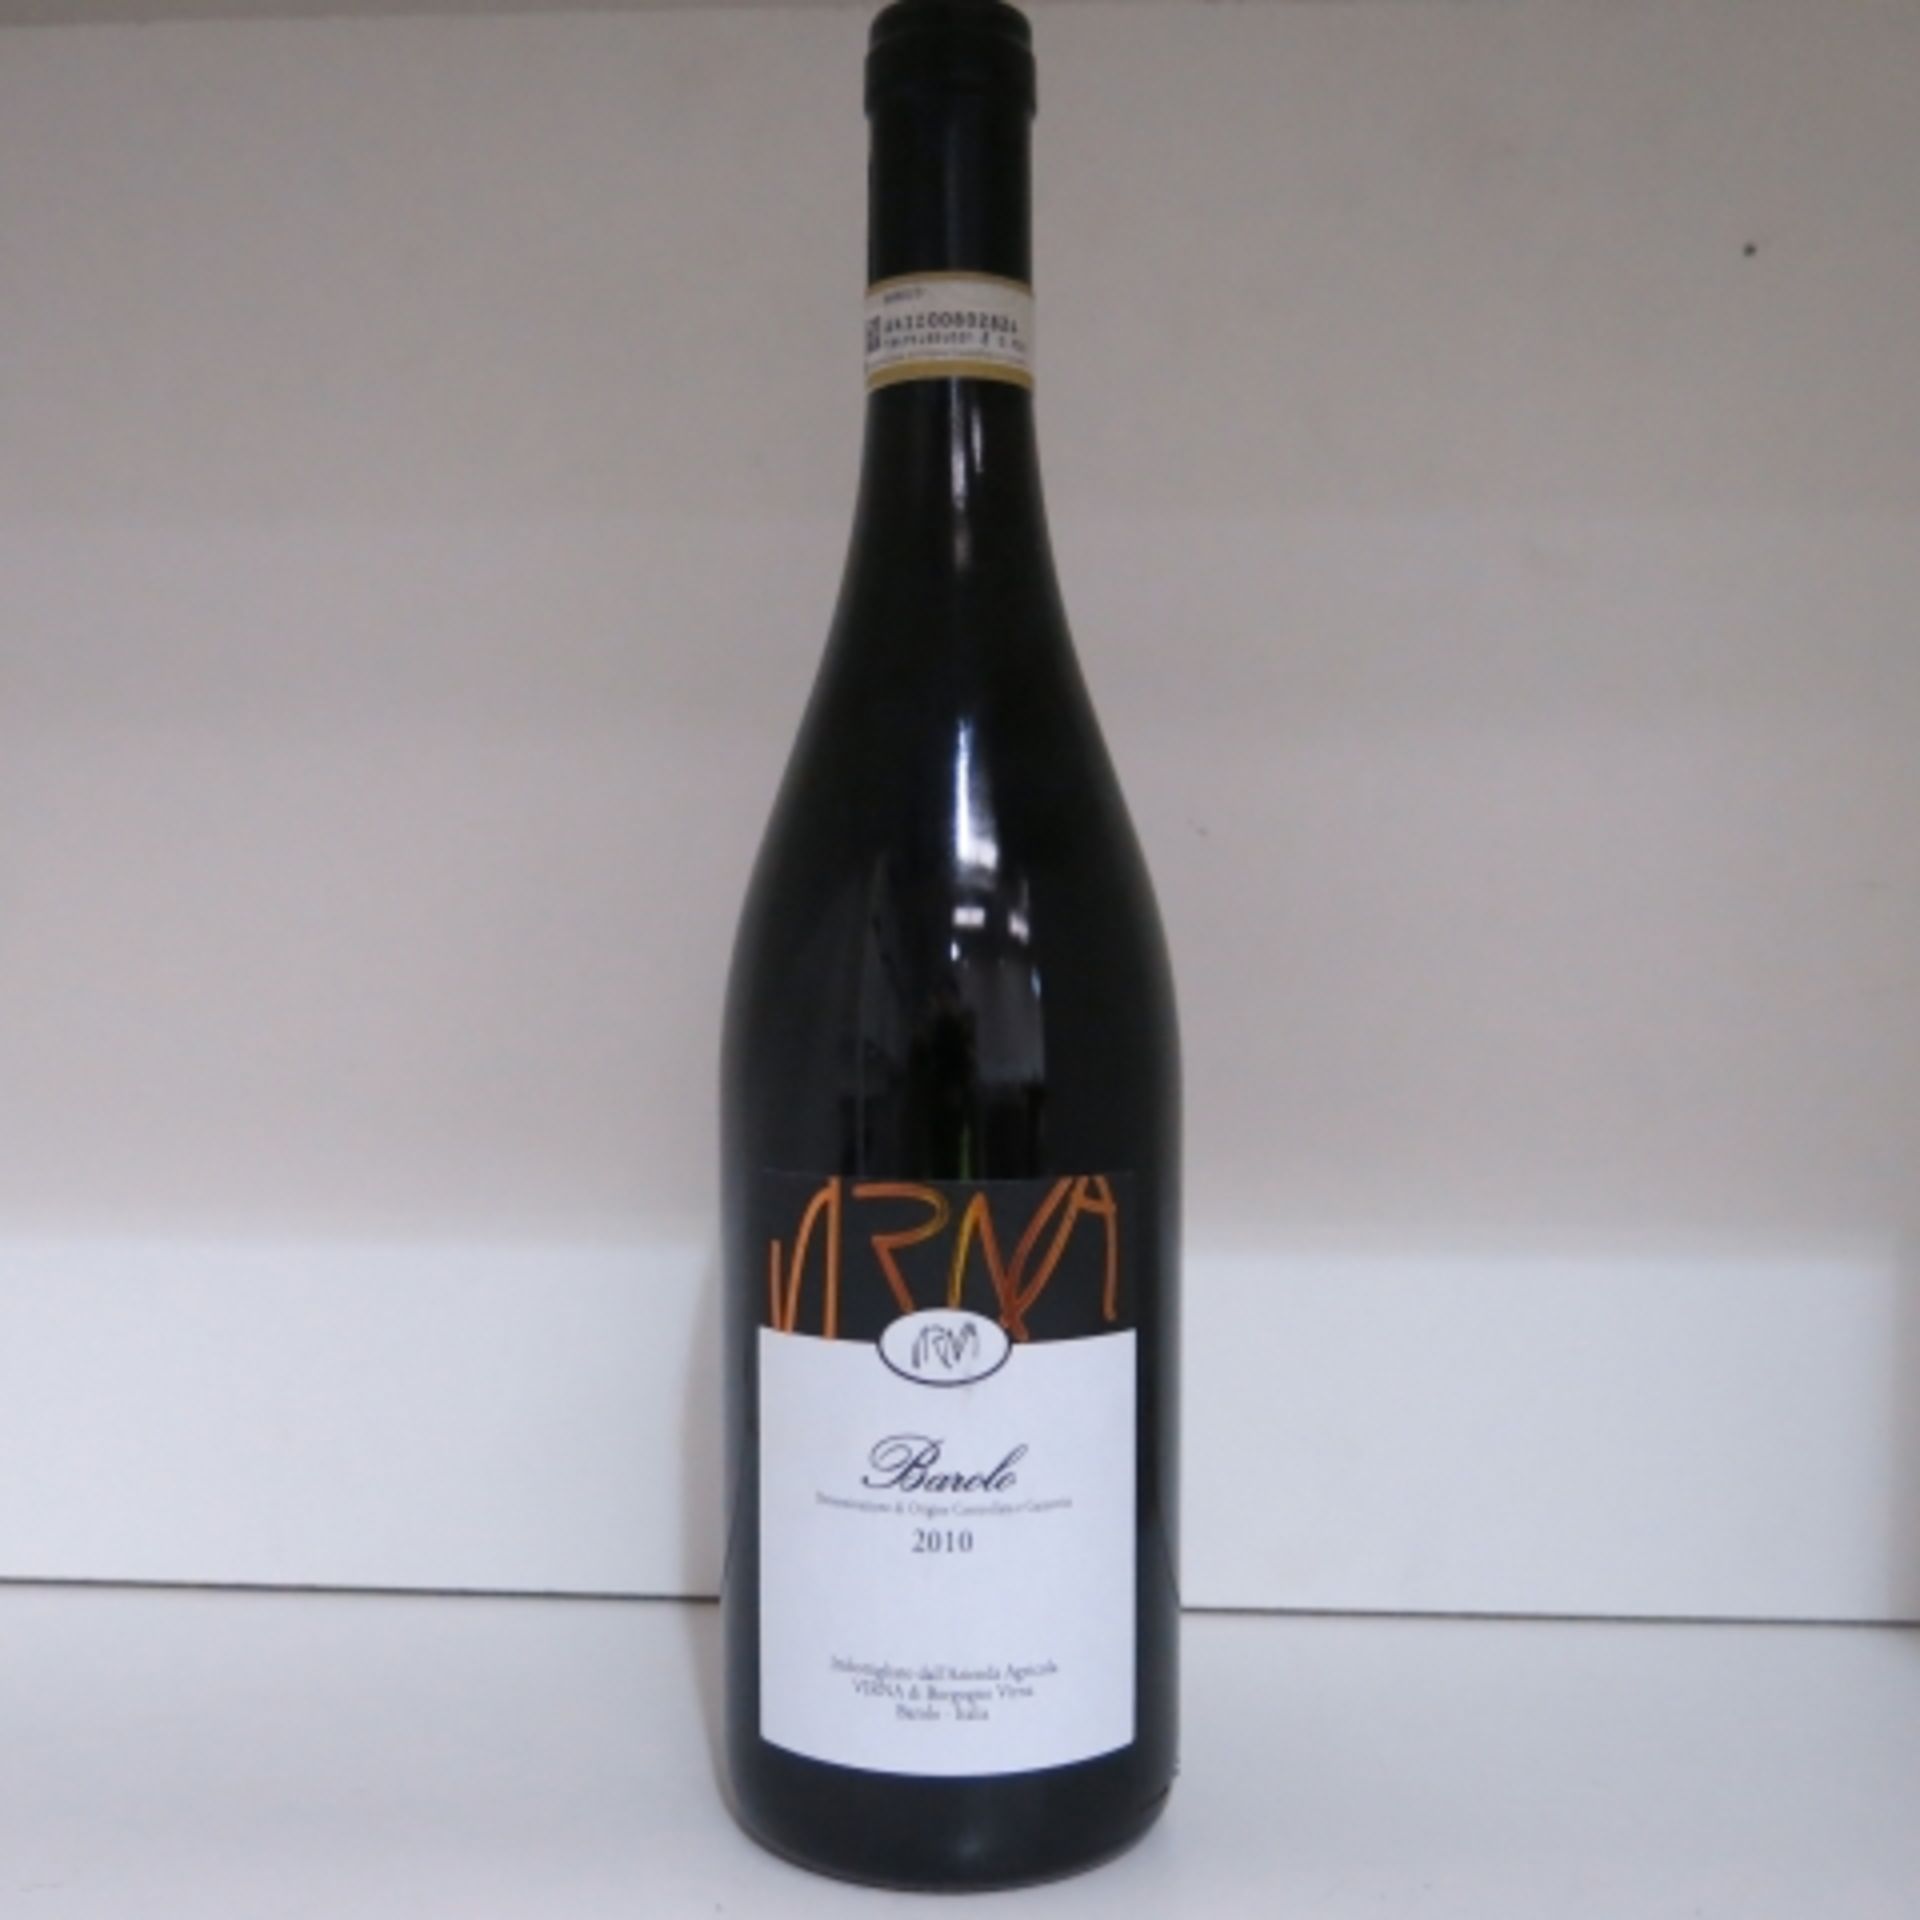 * 1 x Case of Virna Barolo, Grape Nebbioli, ABV 14%, from the Region of Piemont, Italy. (6